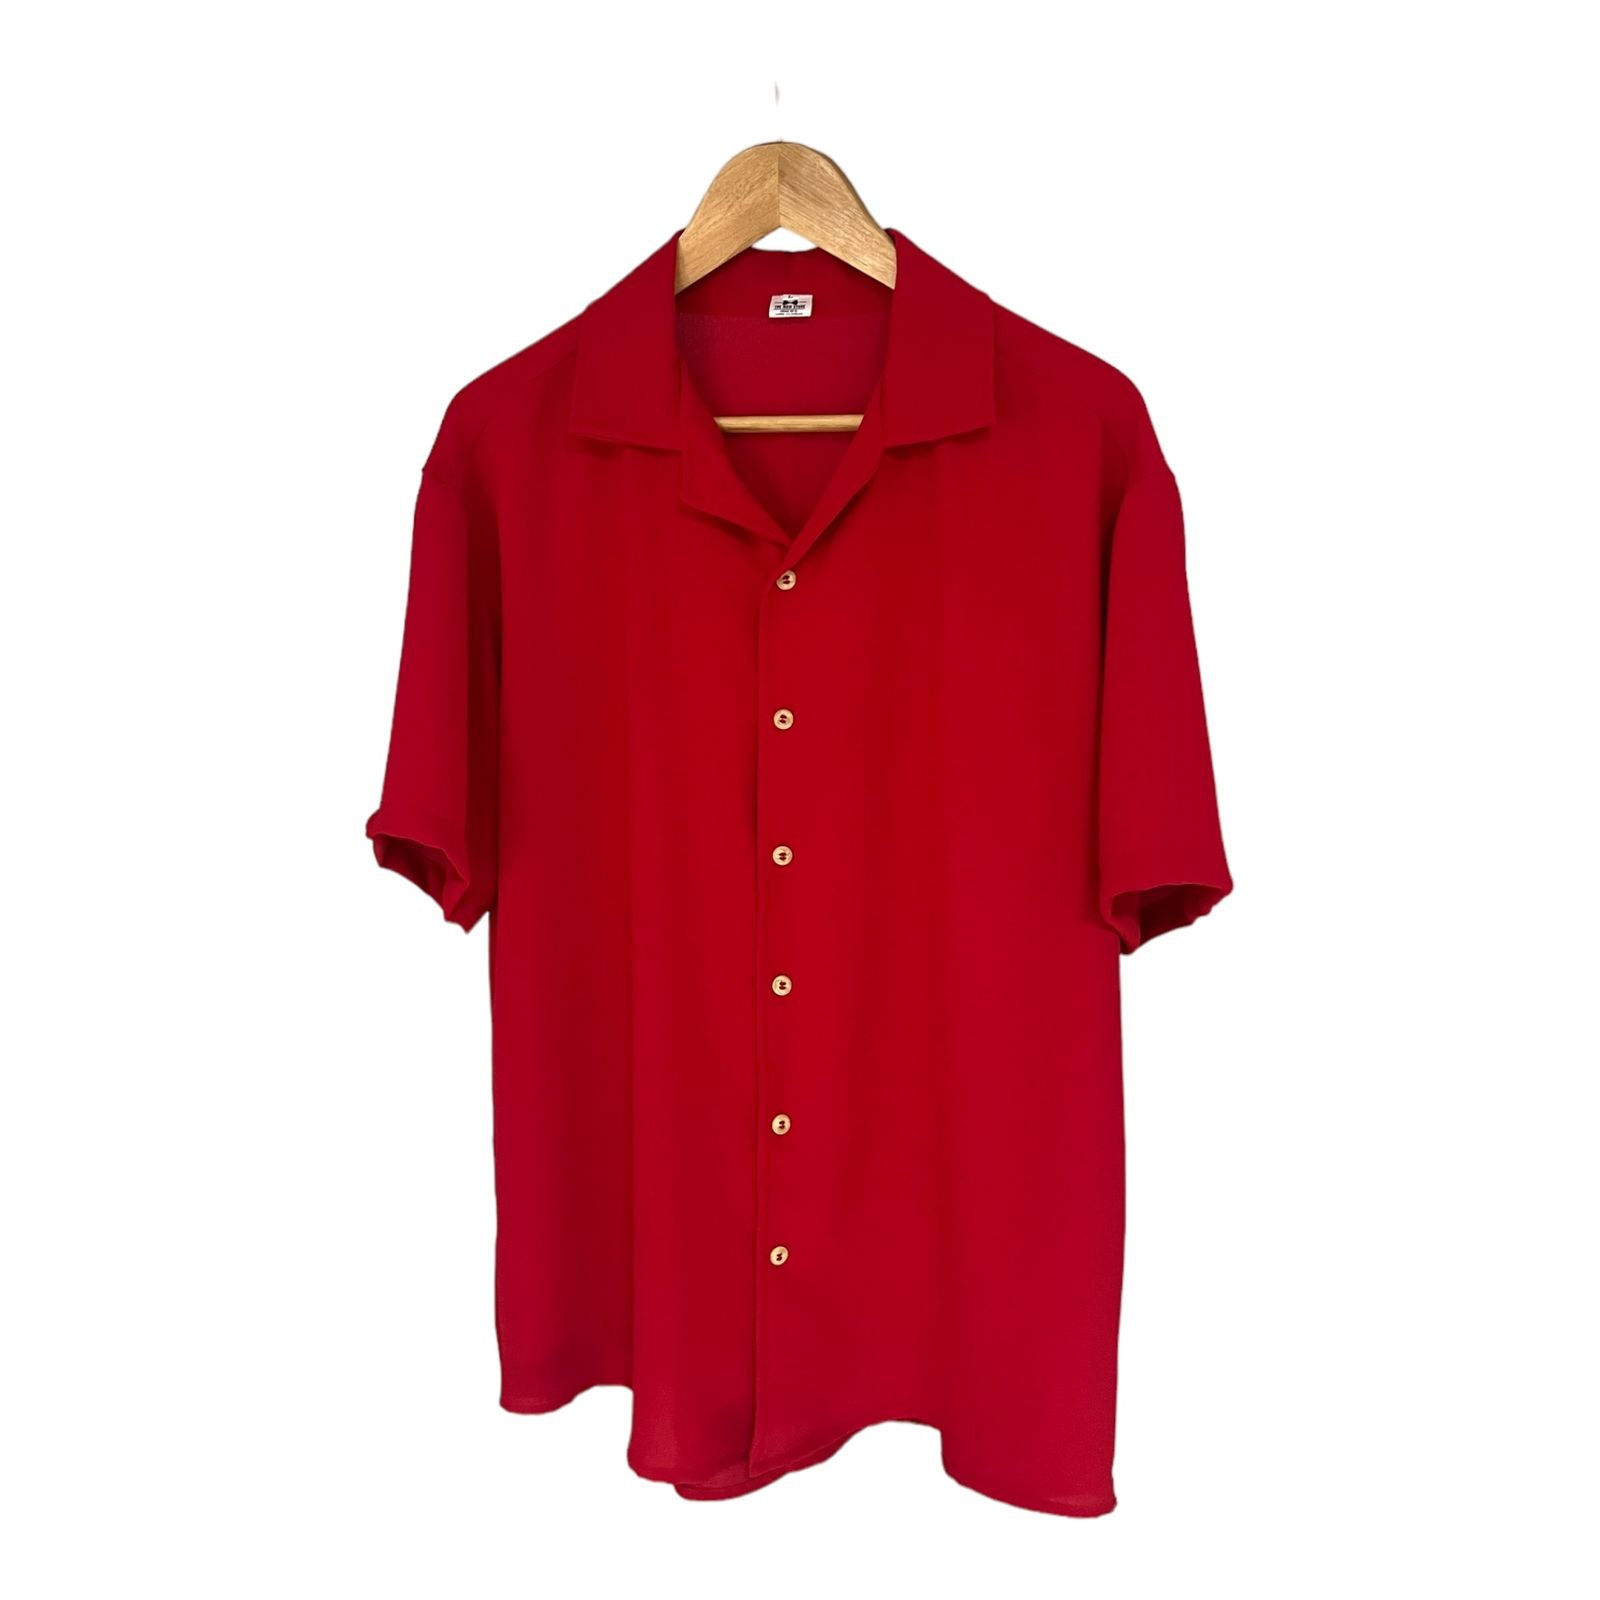 Camisa Solapa Roja Regular Fit